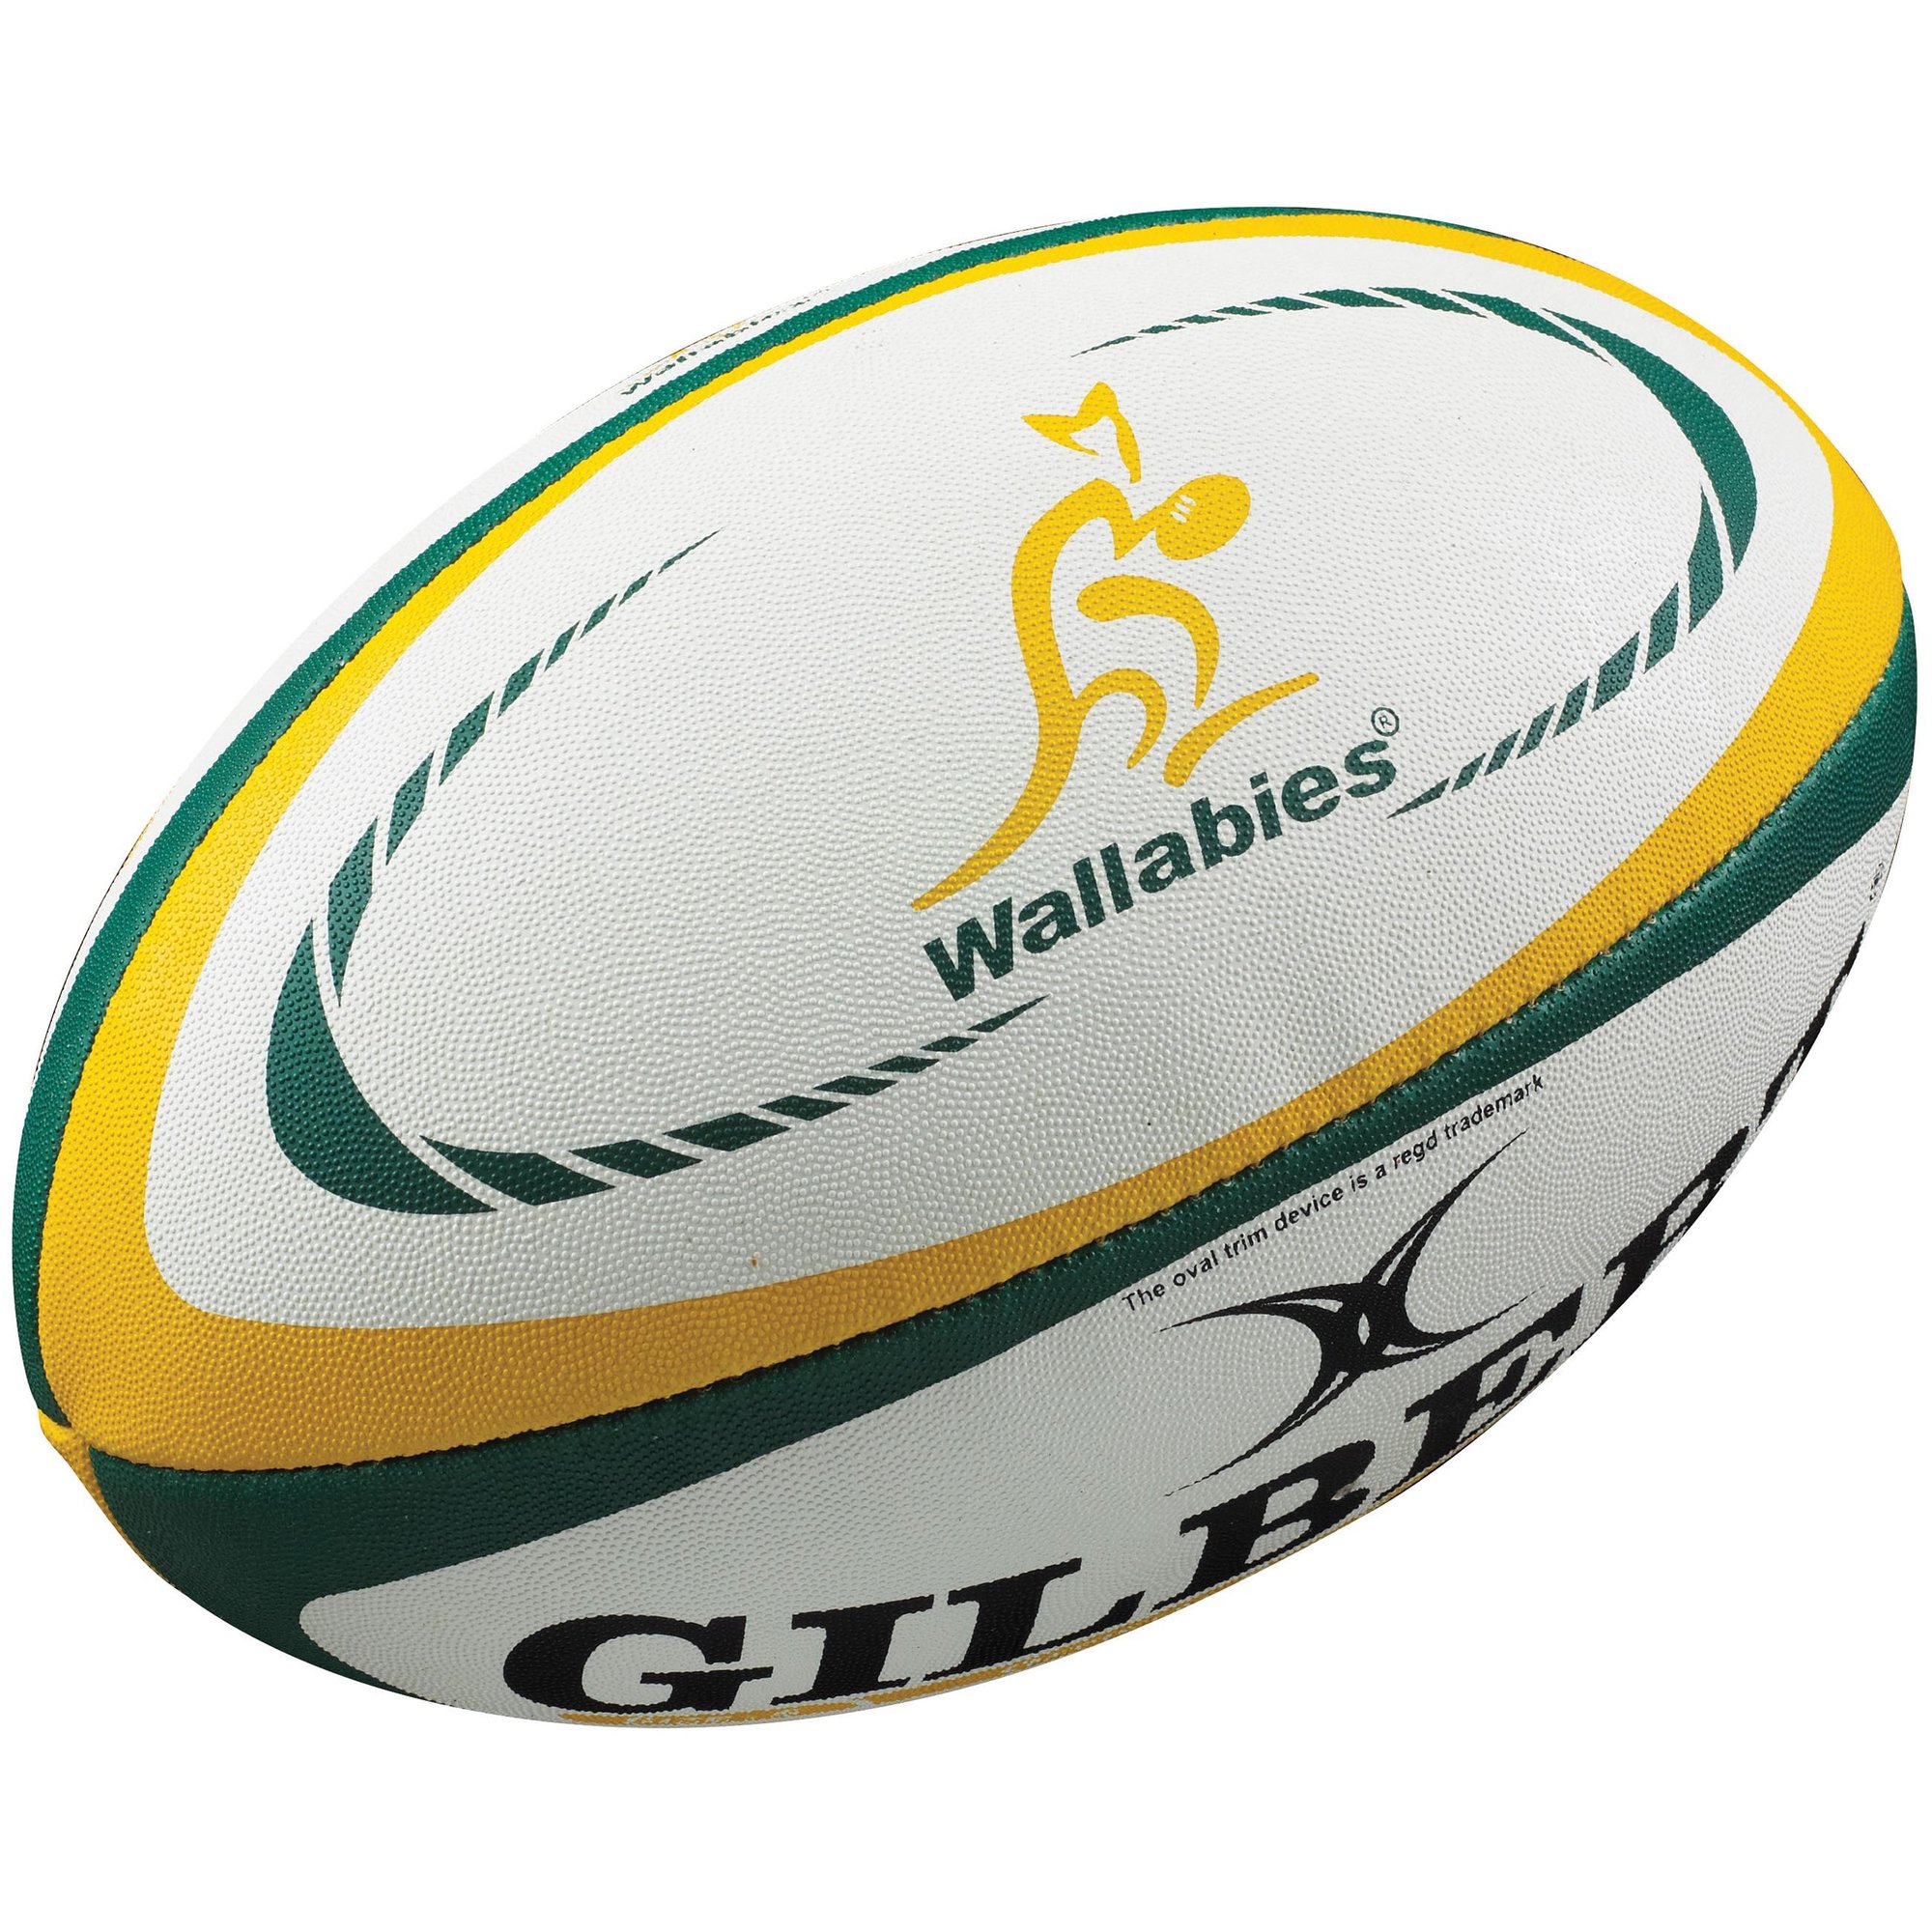 Gilbert Australia Replica Ball | Rugby Balls | Rugby Now